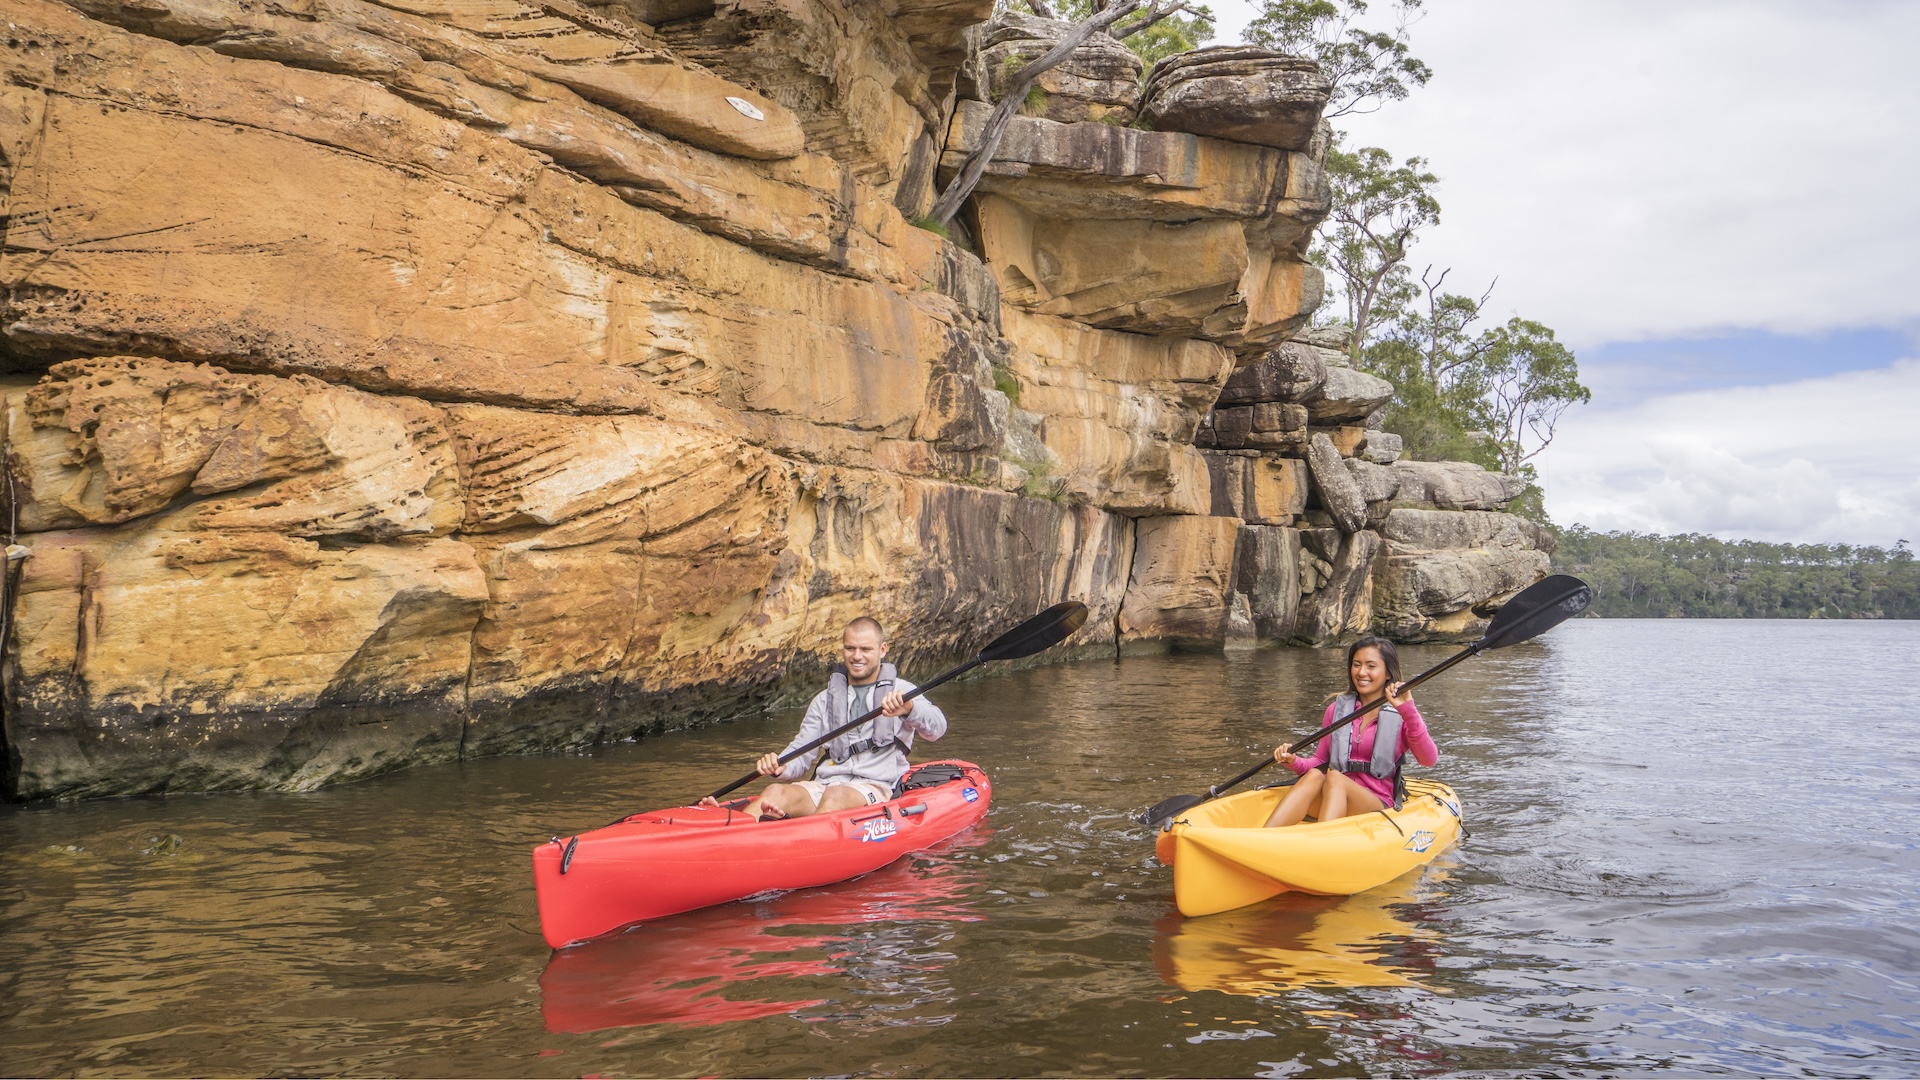 Two people kayaking next to a large rock